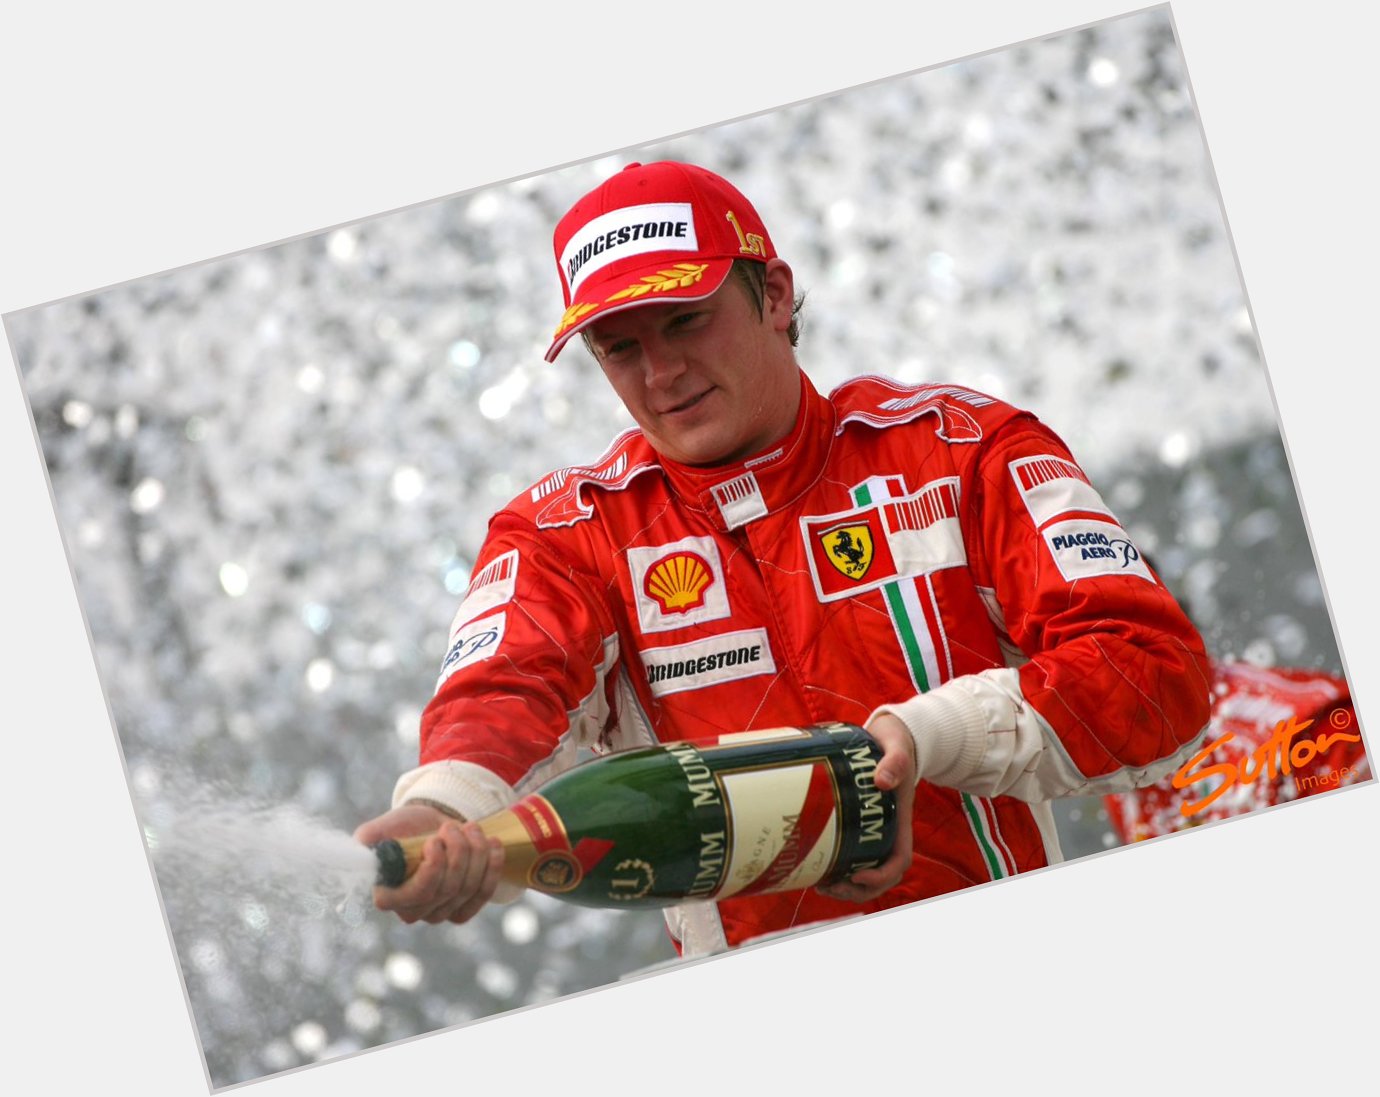 Suttonimages: Happy Birthday to 2007 F1 World Champion Kimi Raikkonen, born on this day in 1979 